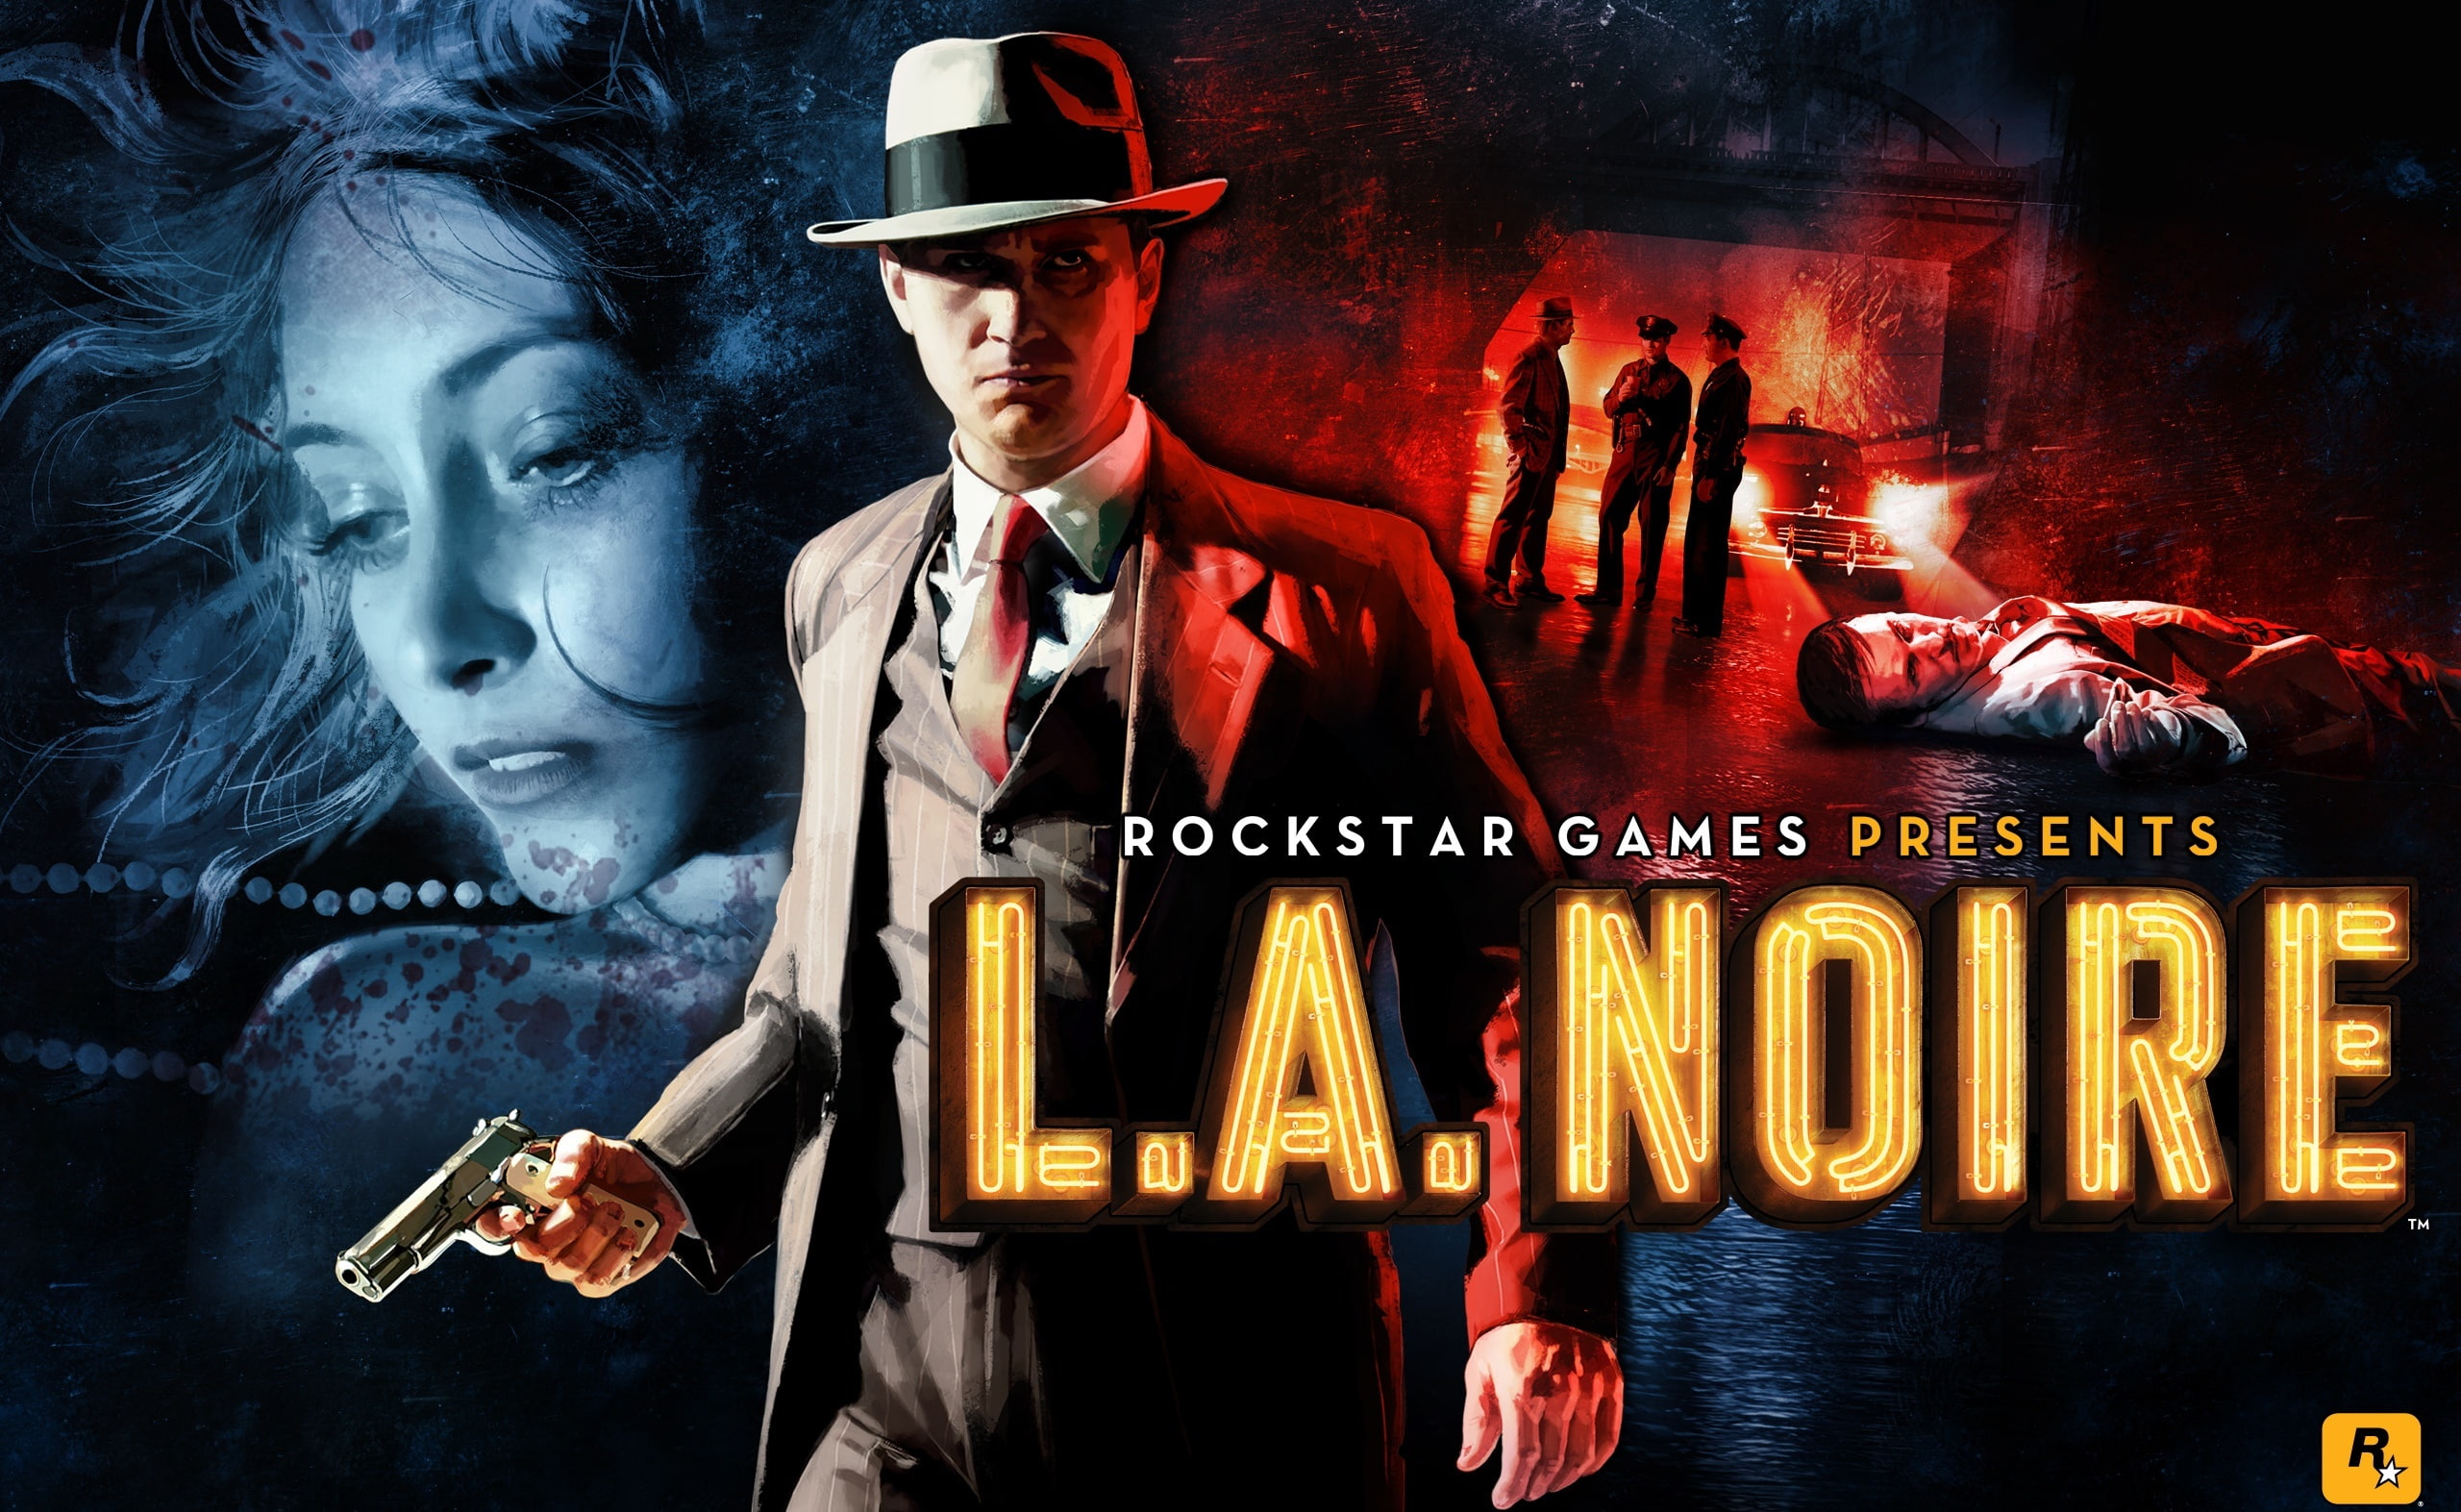 L.A. Noire, L.A. Noire text overlay, Games, video game, rockstar games